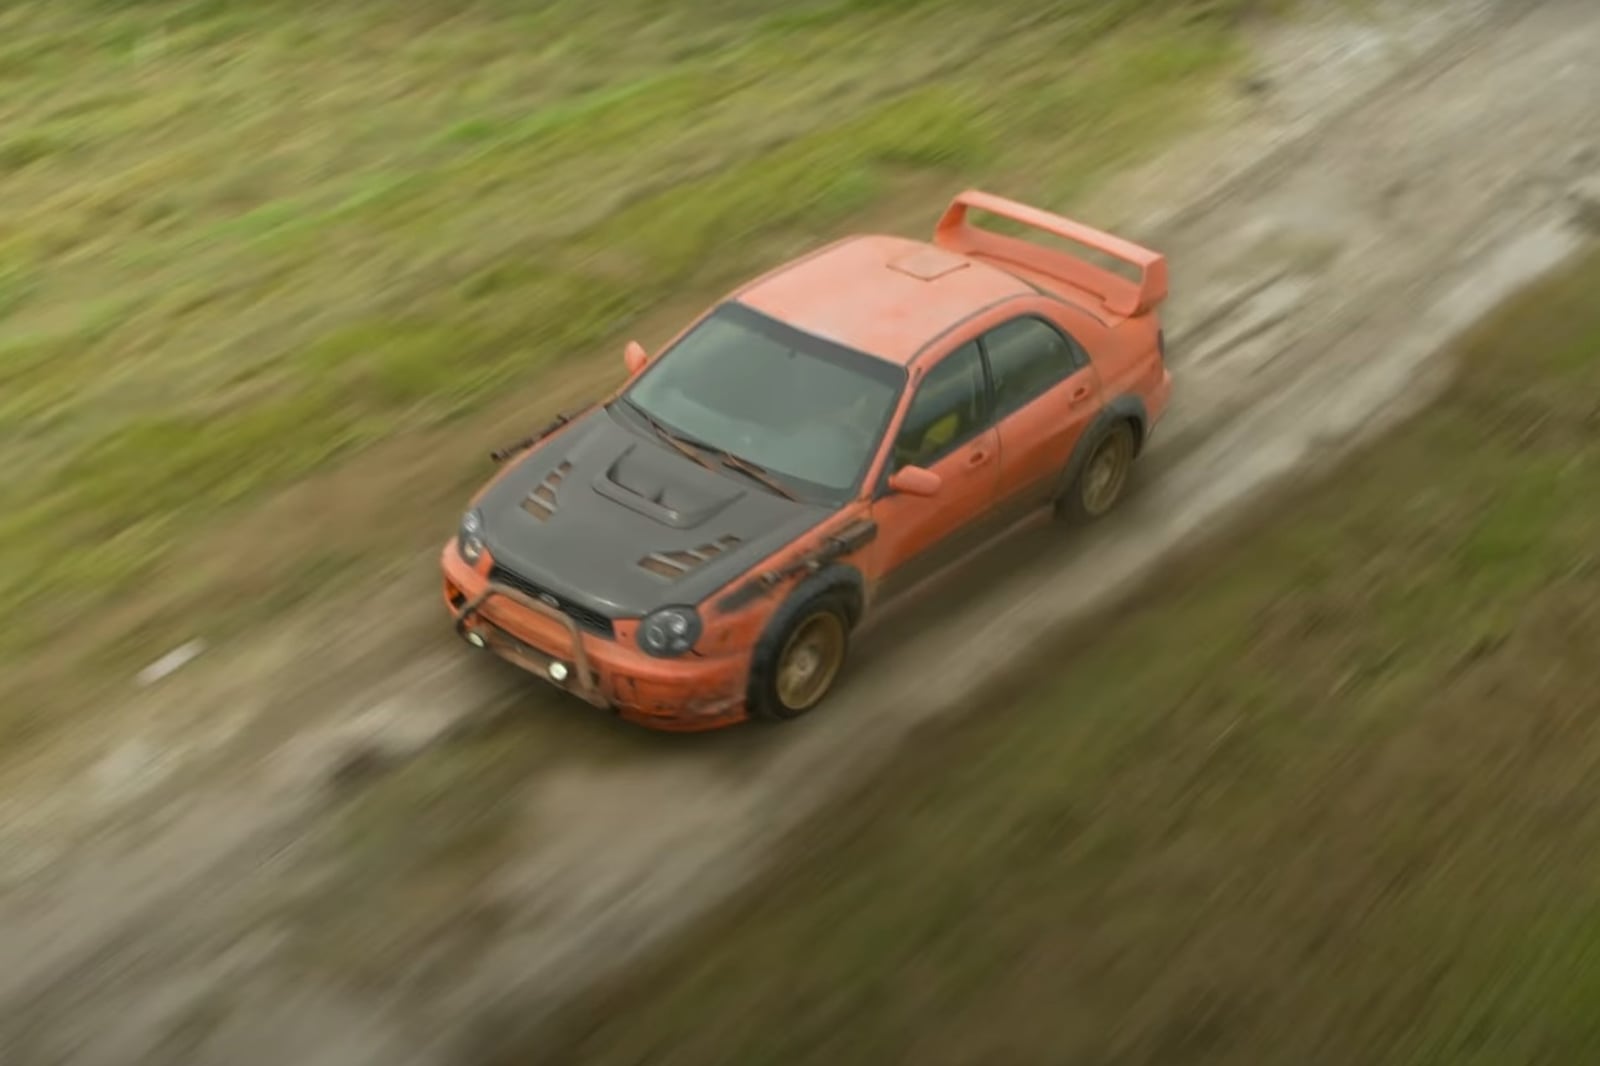 Twisted Metal' trailer has Anthony Mackie driving a Subaru WRX with machine  guns - Autoblog